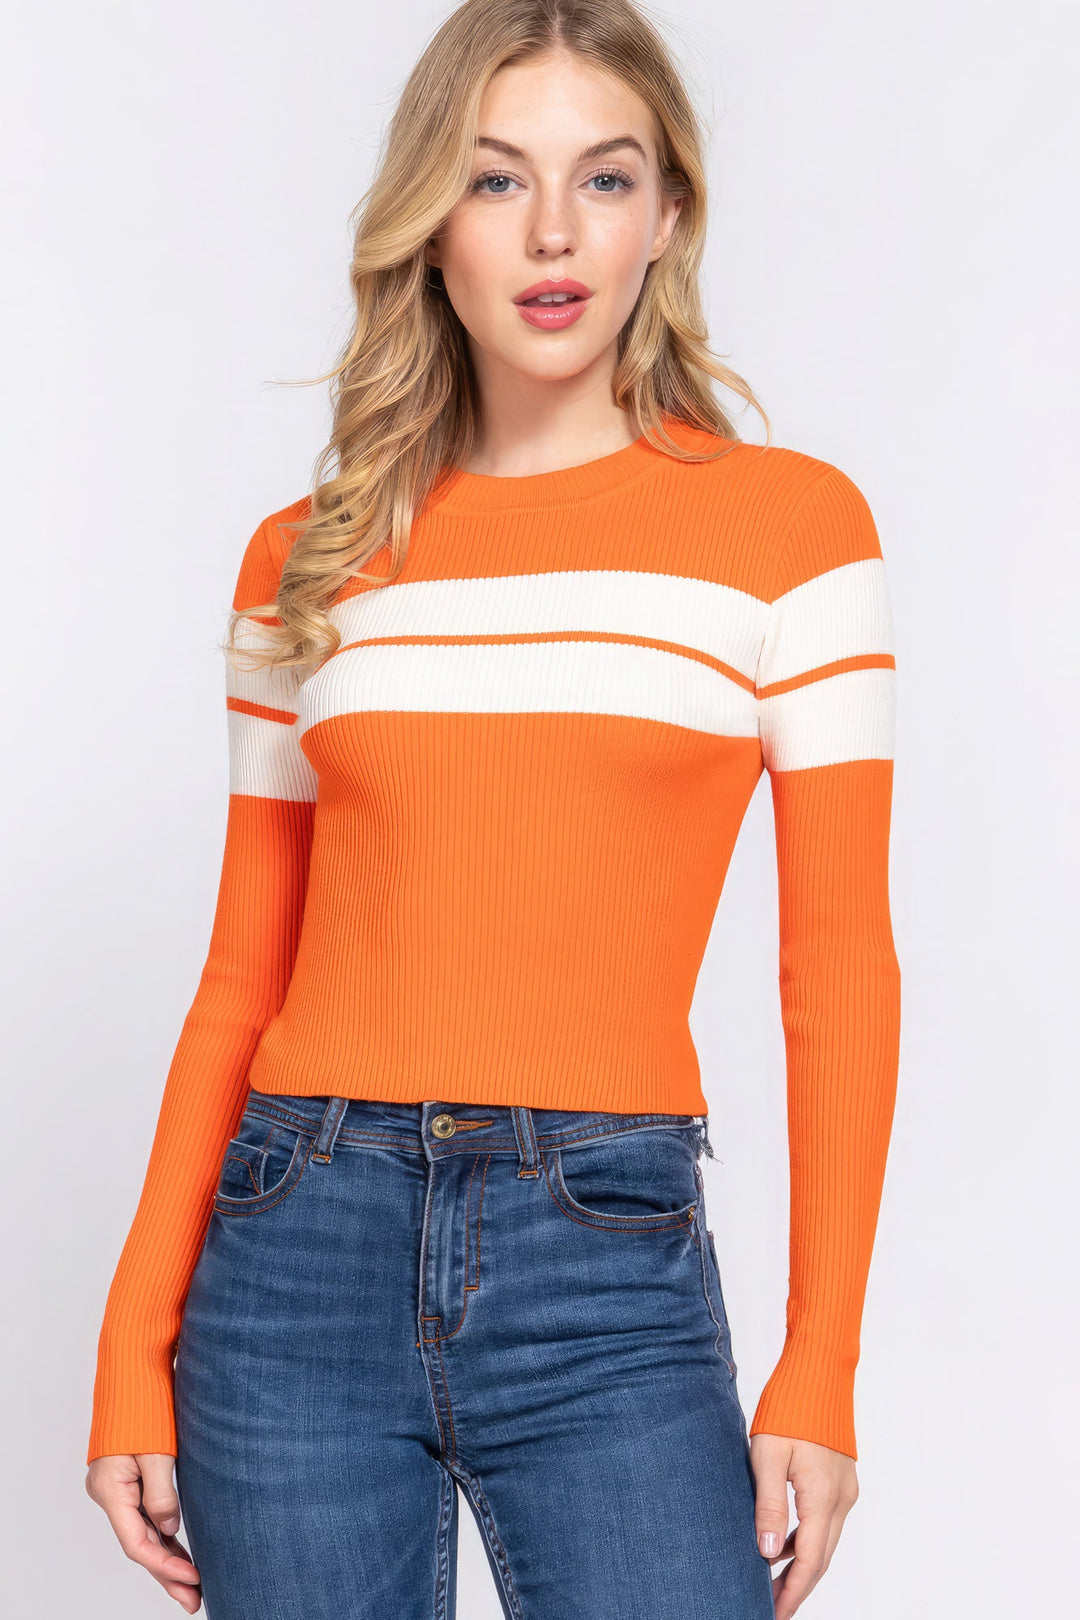 The802Gypsy  shirts and tops ❤GYPSY LOVE-Long Slv Stripe Rib Sweater